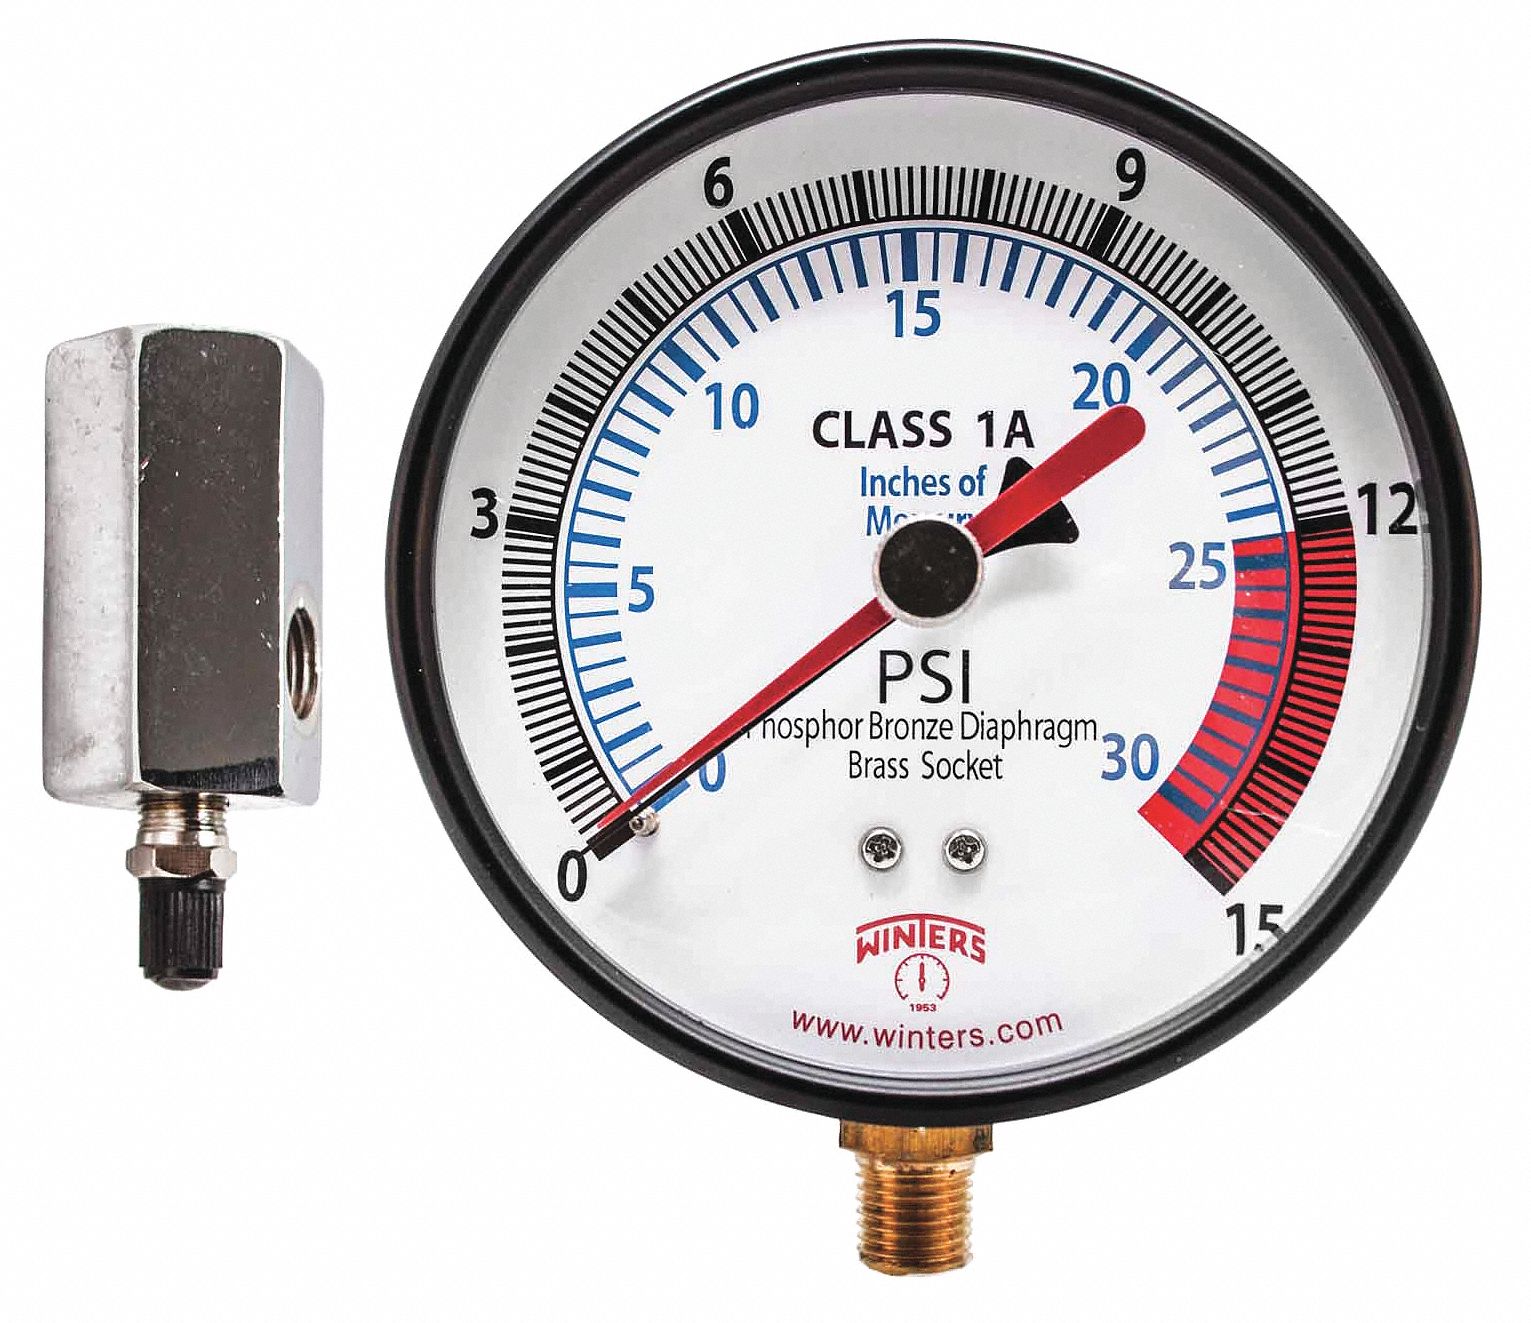 38VL19 - Low Pressure Test Kit 0 to 15 psi